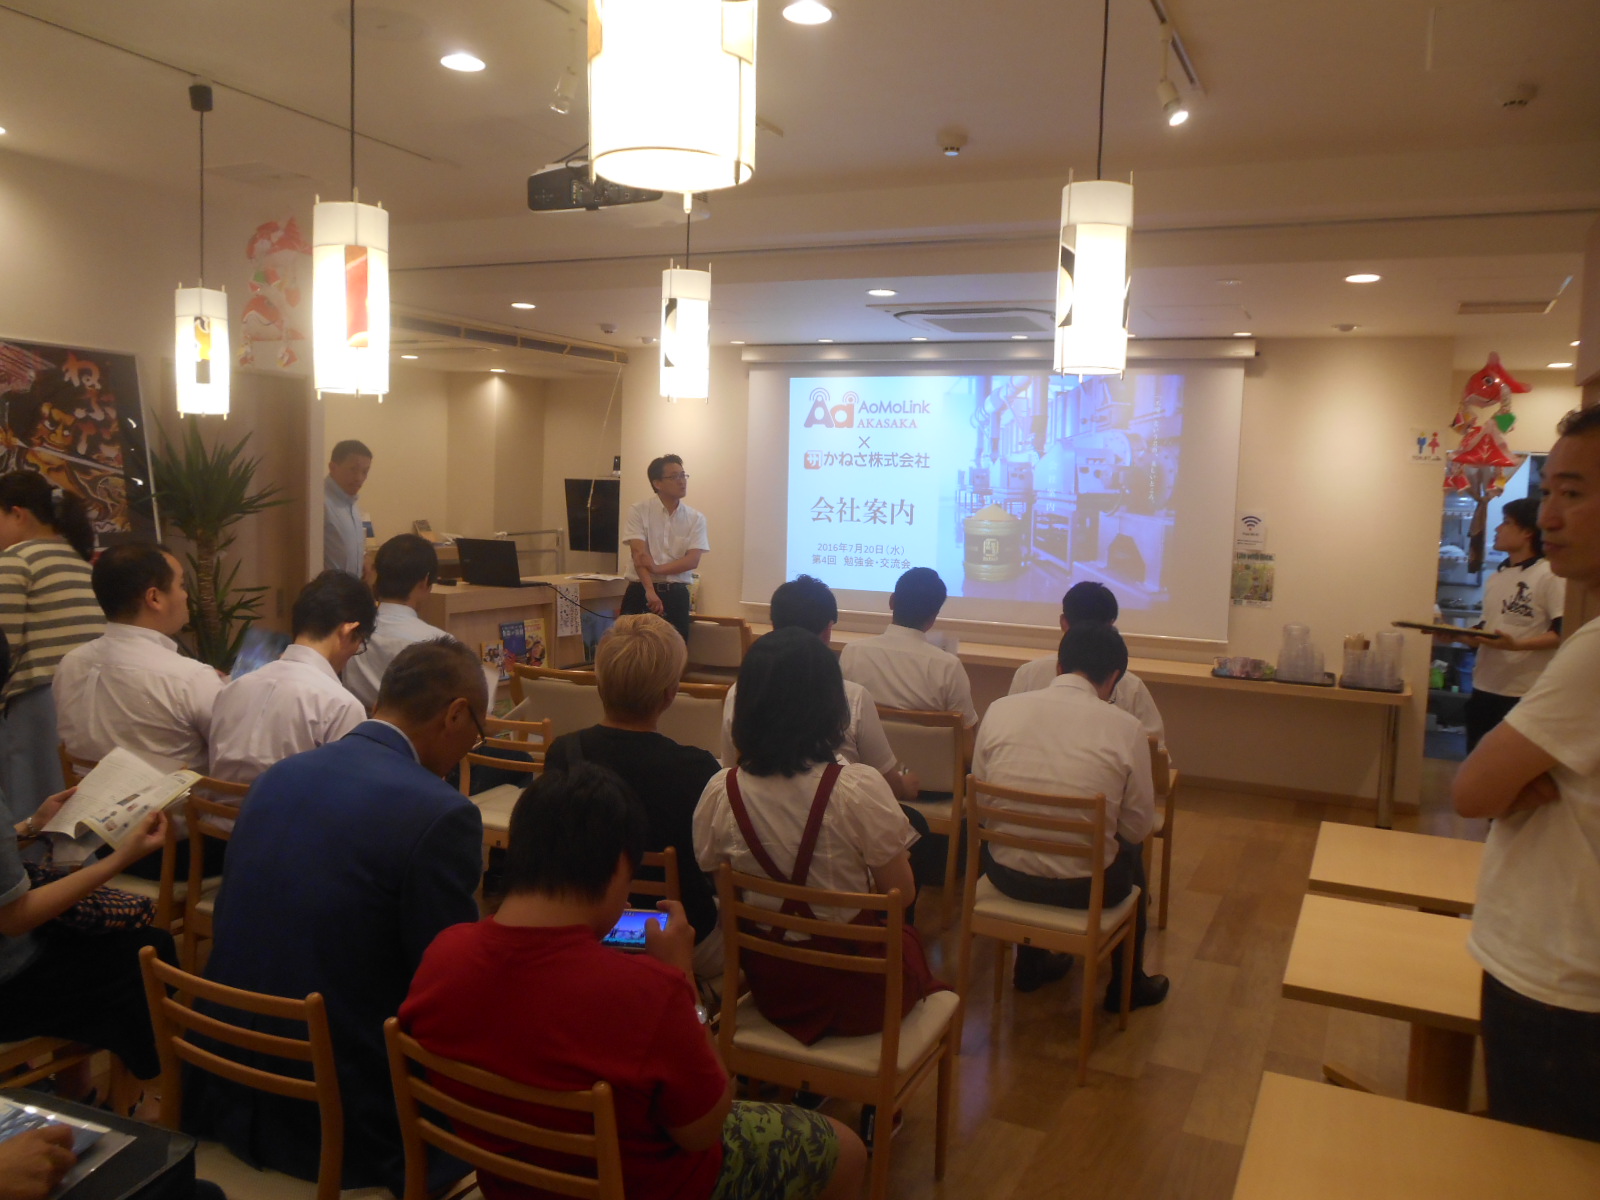 DSCN1839 - AoMoLink〜赤坂〜の第2回勉強会&交流会開催します。